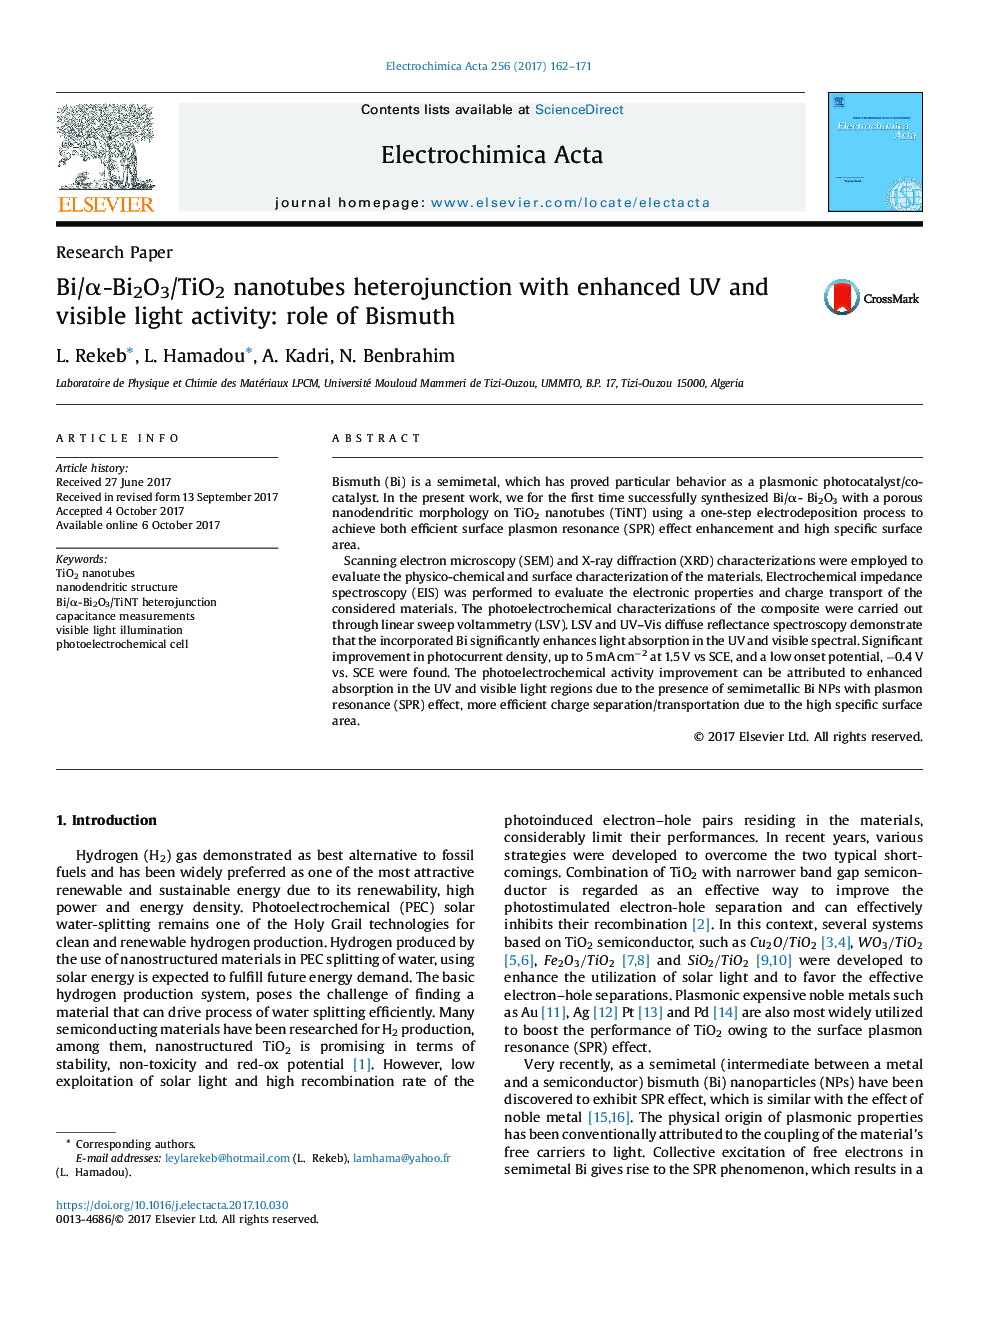 Bi/Î±-Bi2O3/TiO2 nanotubes heterojunction with enhanced UV and visible light activity: role of Bismuth